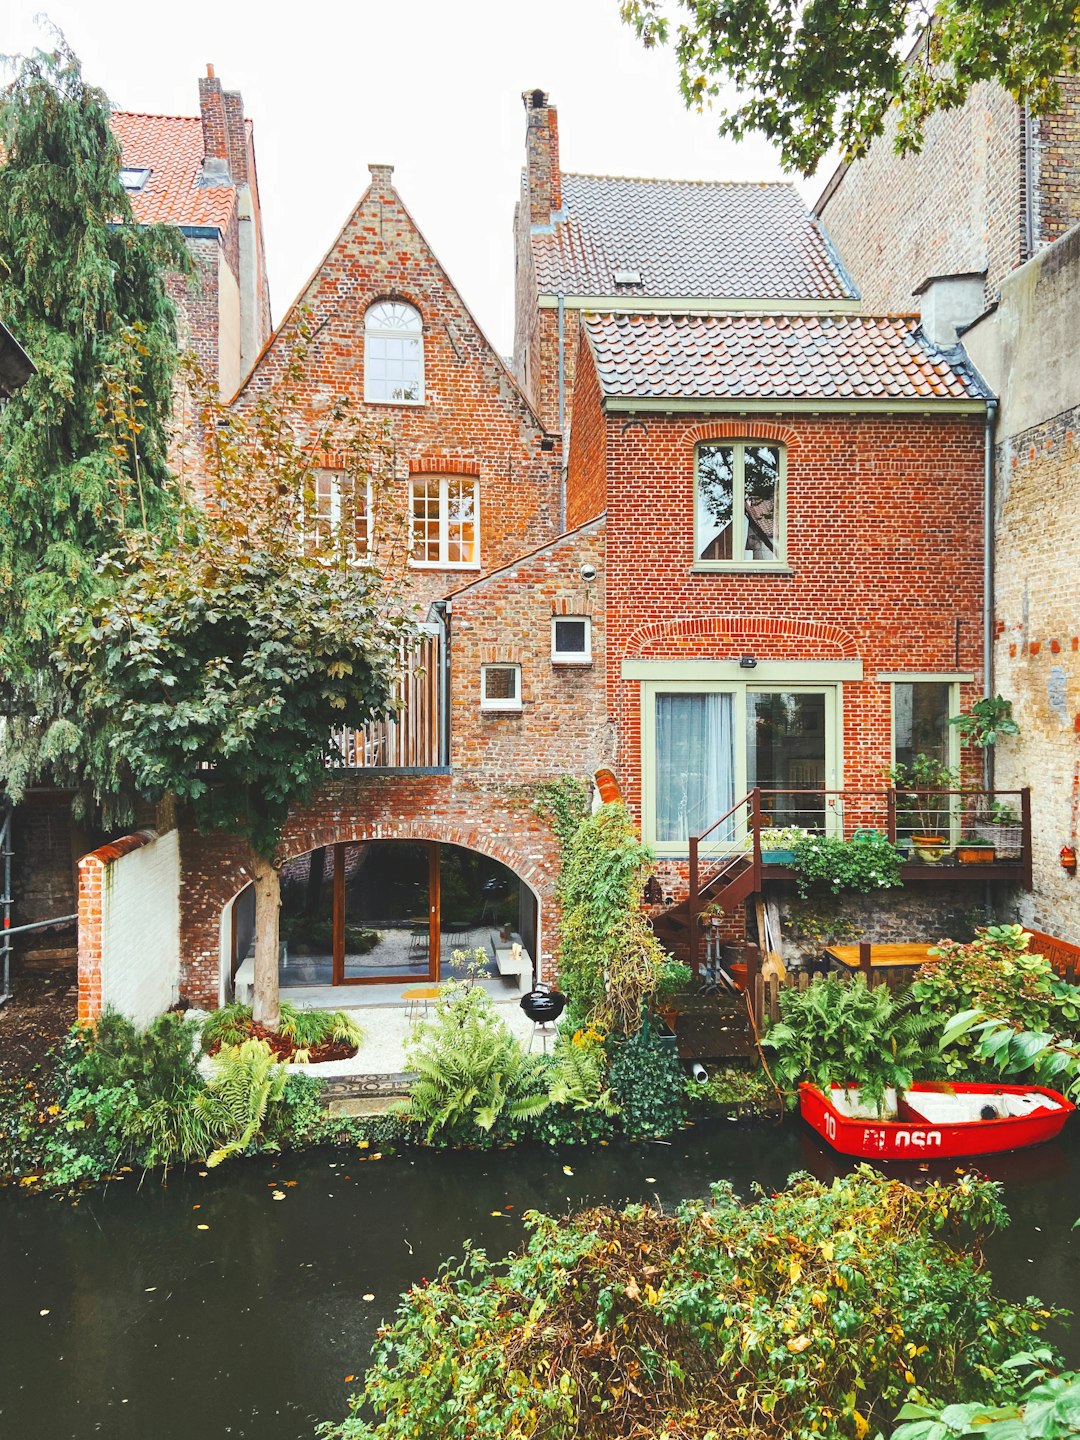 Waterway photo spot Bruges Gent